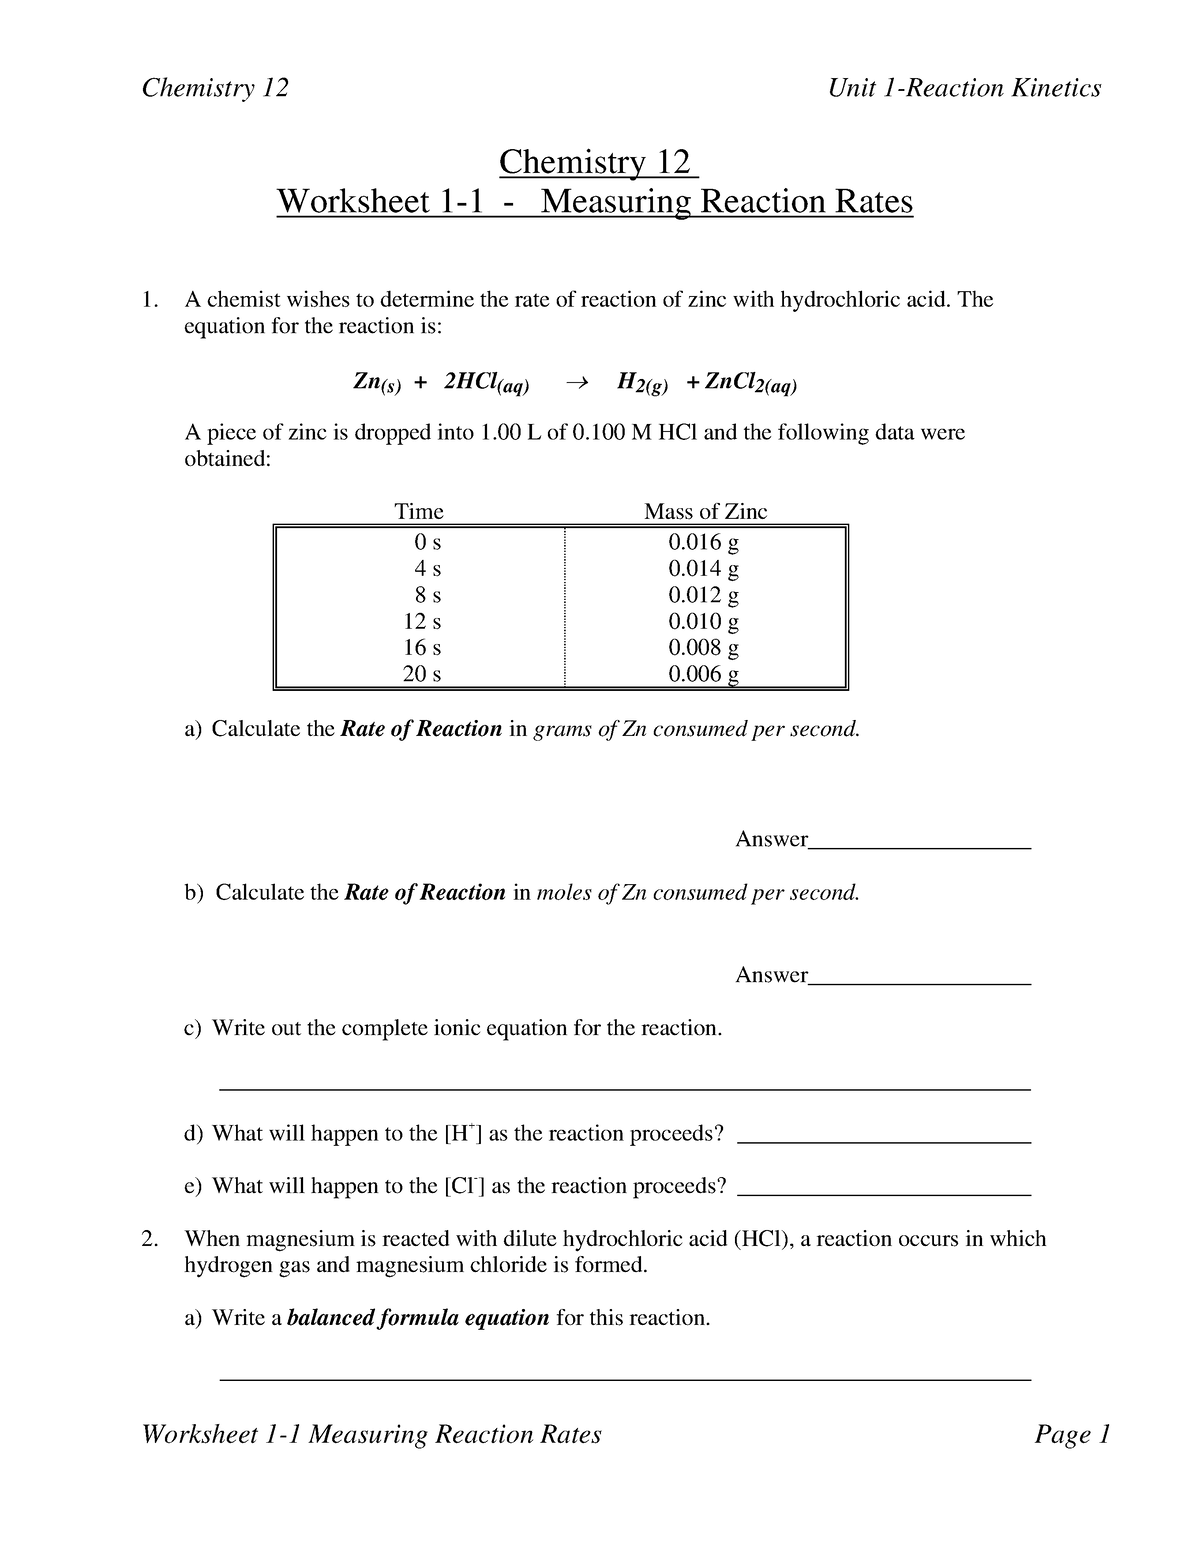 W Mr Colgur Ch 12 Worksheet 1 1 And KEY Chemistry 12 Unit 1 Reaction Kinetics Worksheet 1